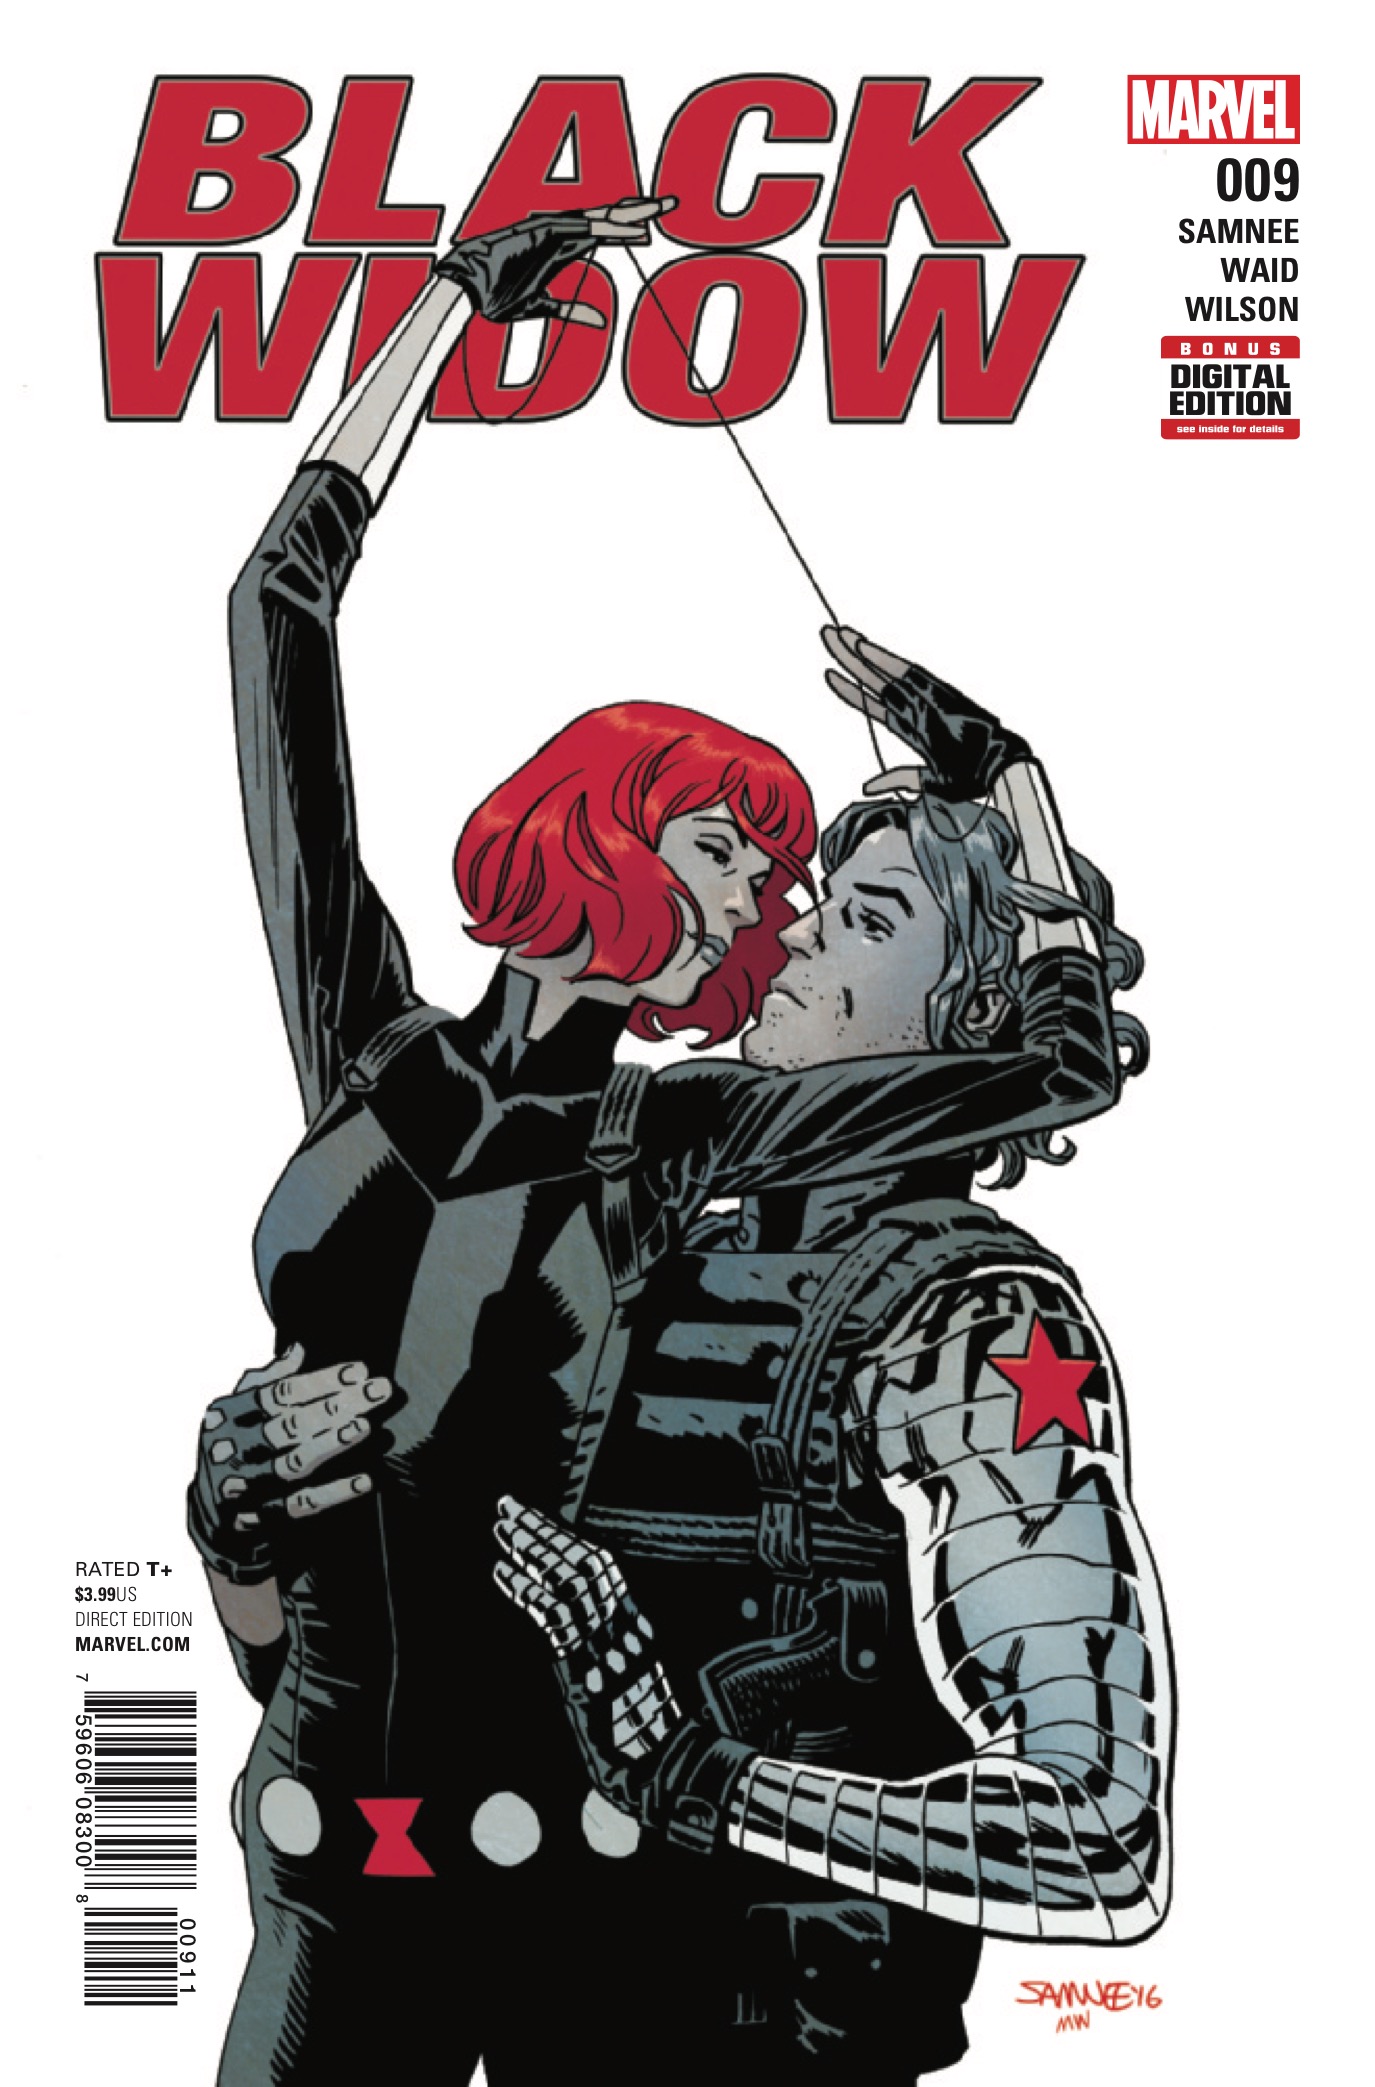 Black Widow #9 Review